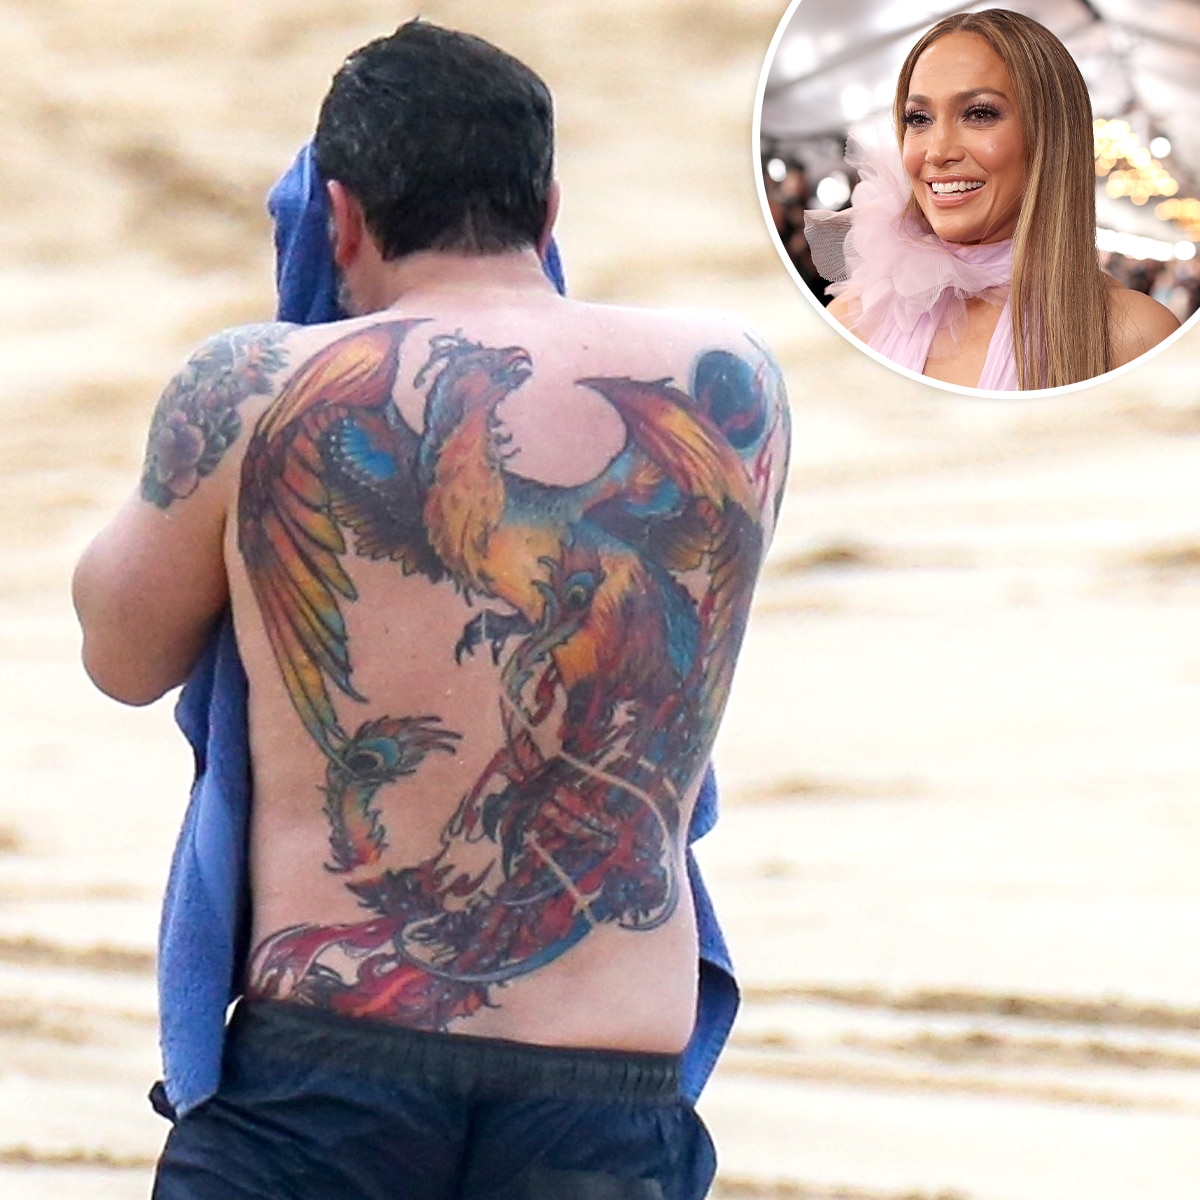 Jennifer Lopez Ben Affleck get matching tattoos on Valentines Day